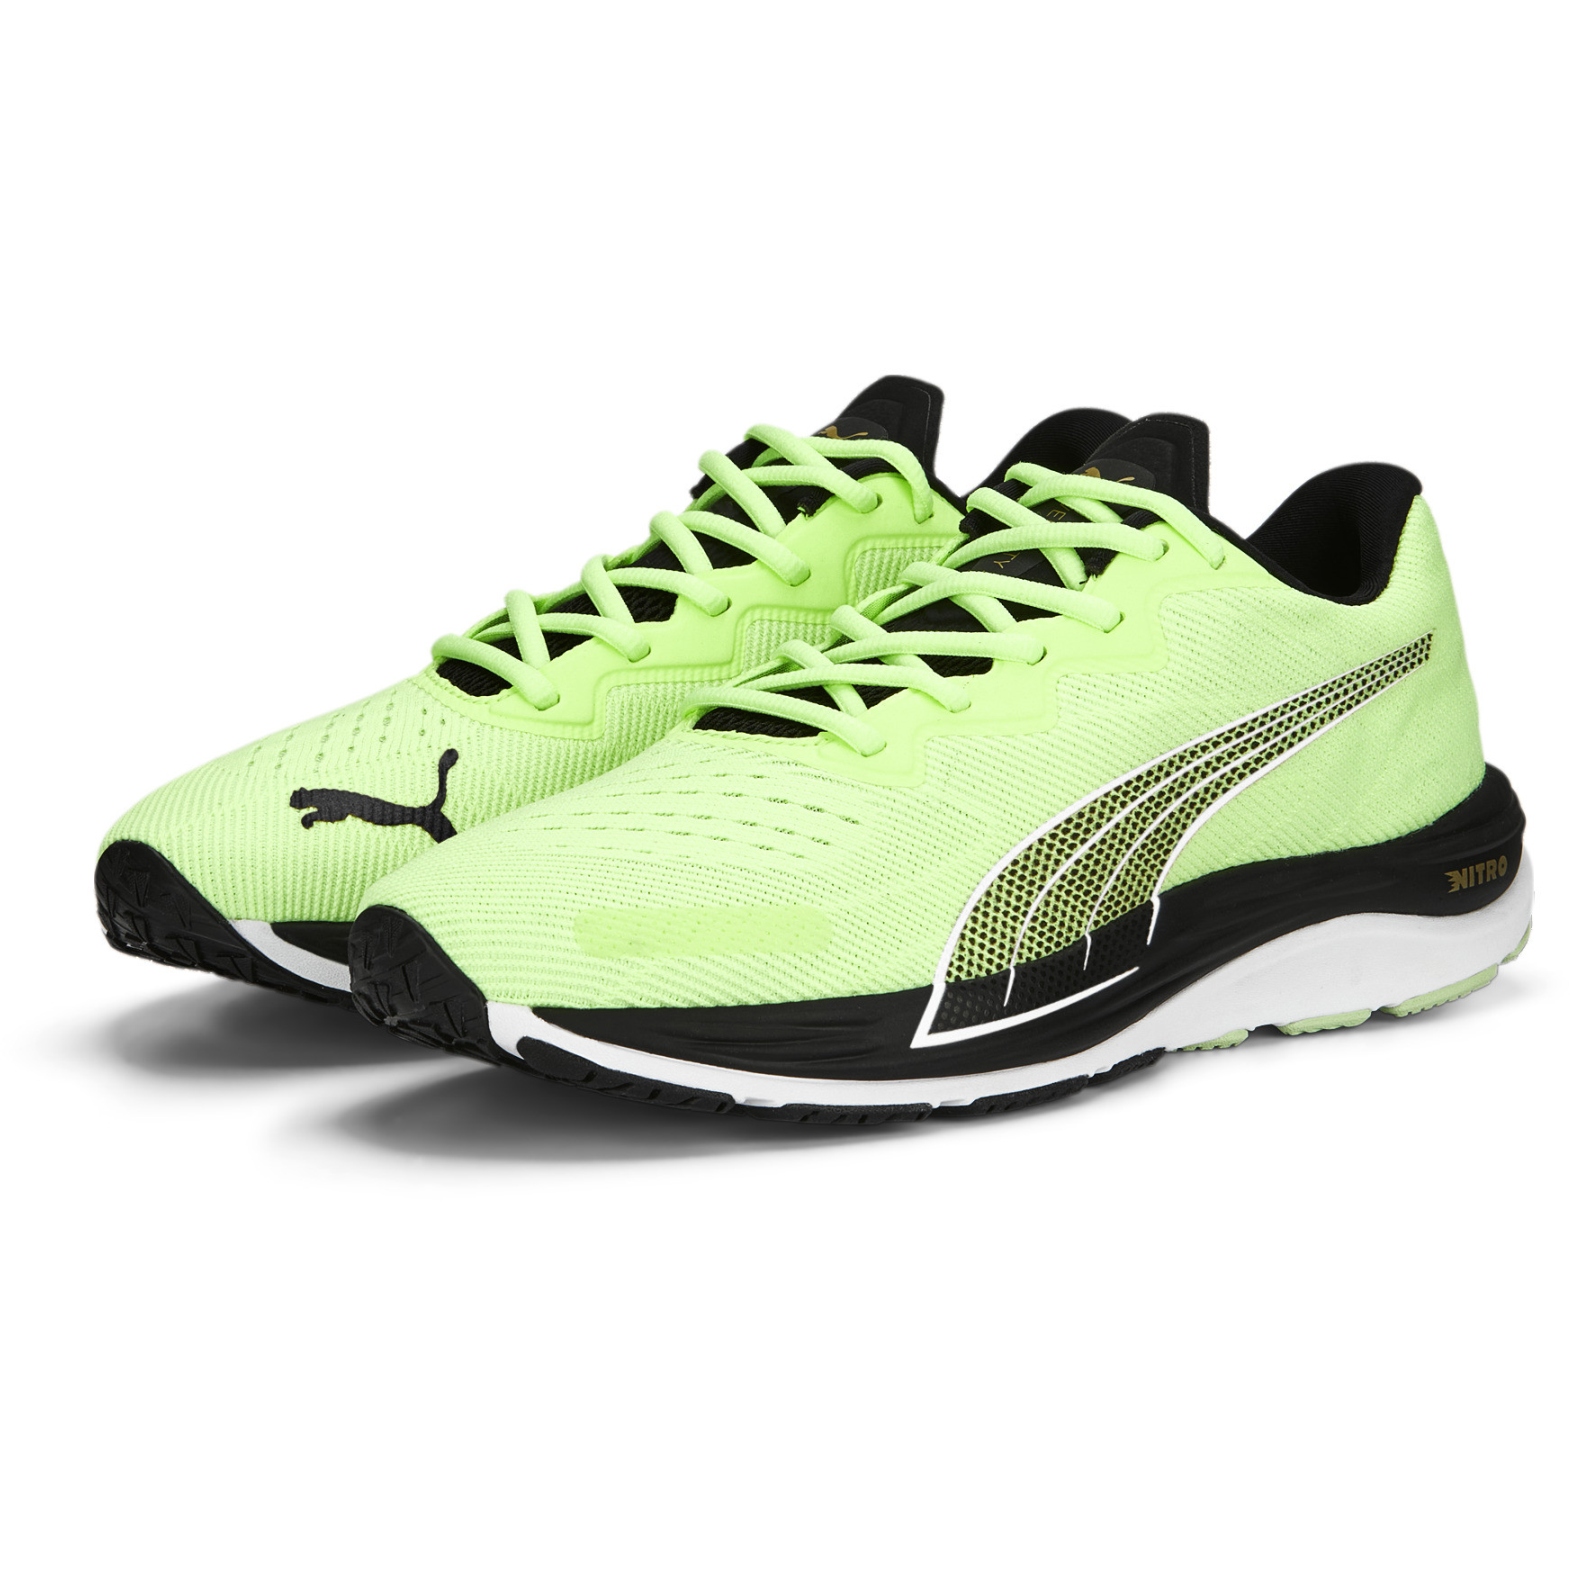 Velocity NITRO™ 2 Men's Running Shoes